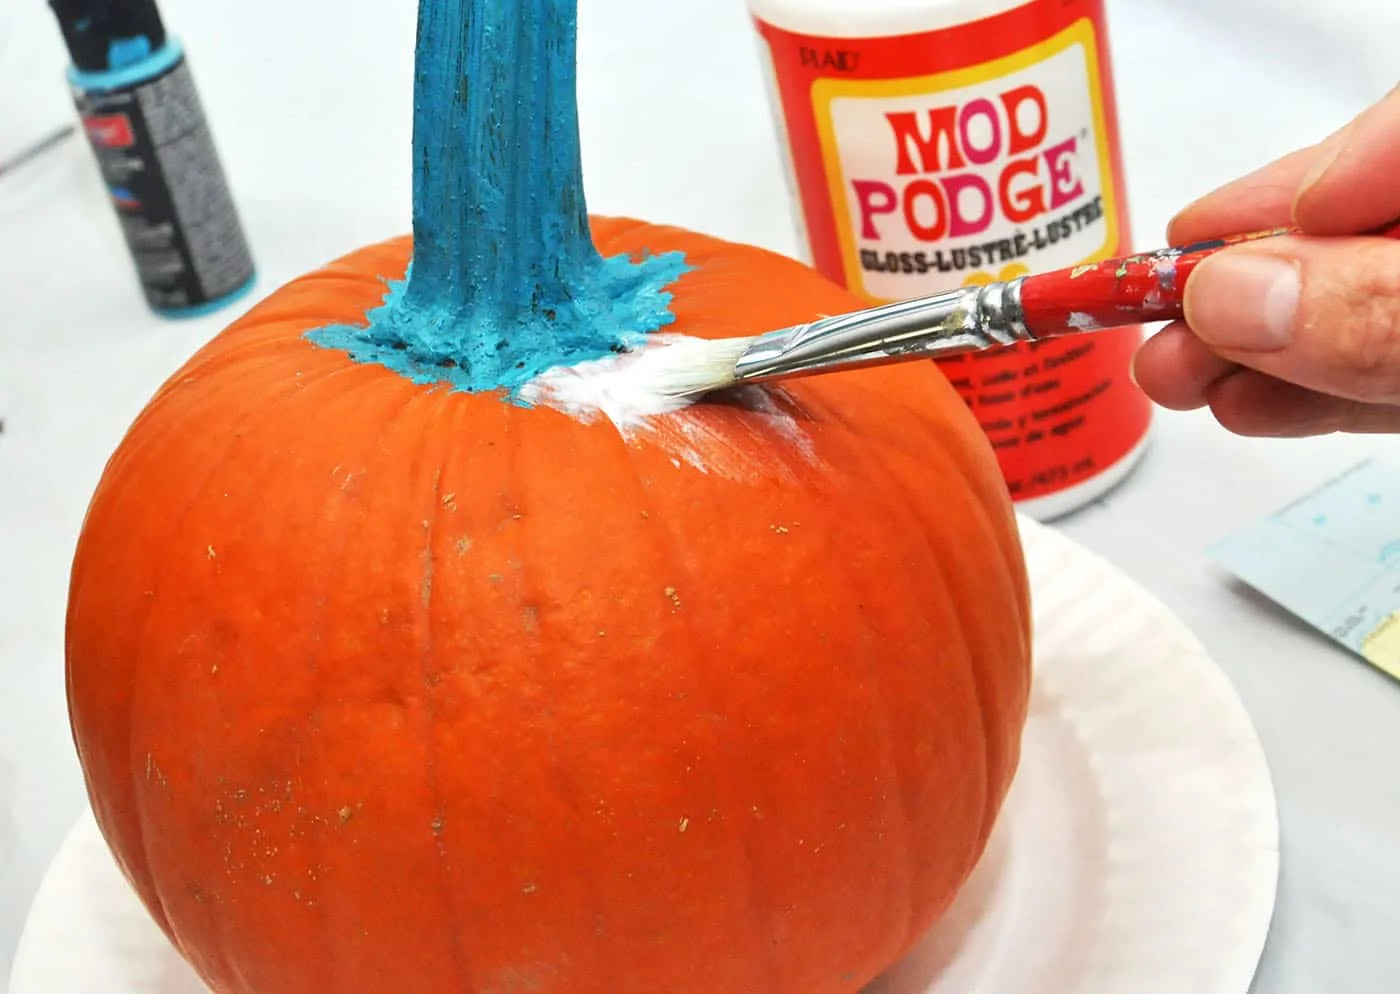 Applying Mod Podge to a pumpkin